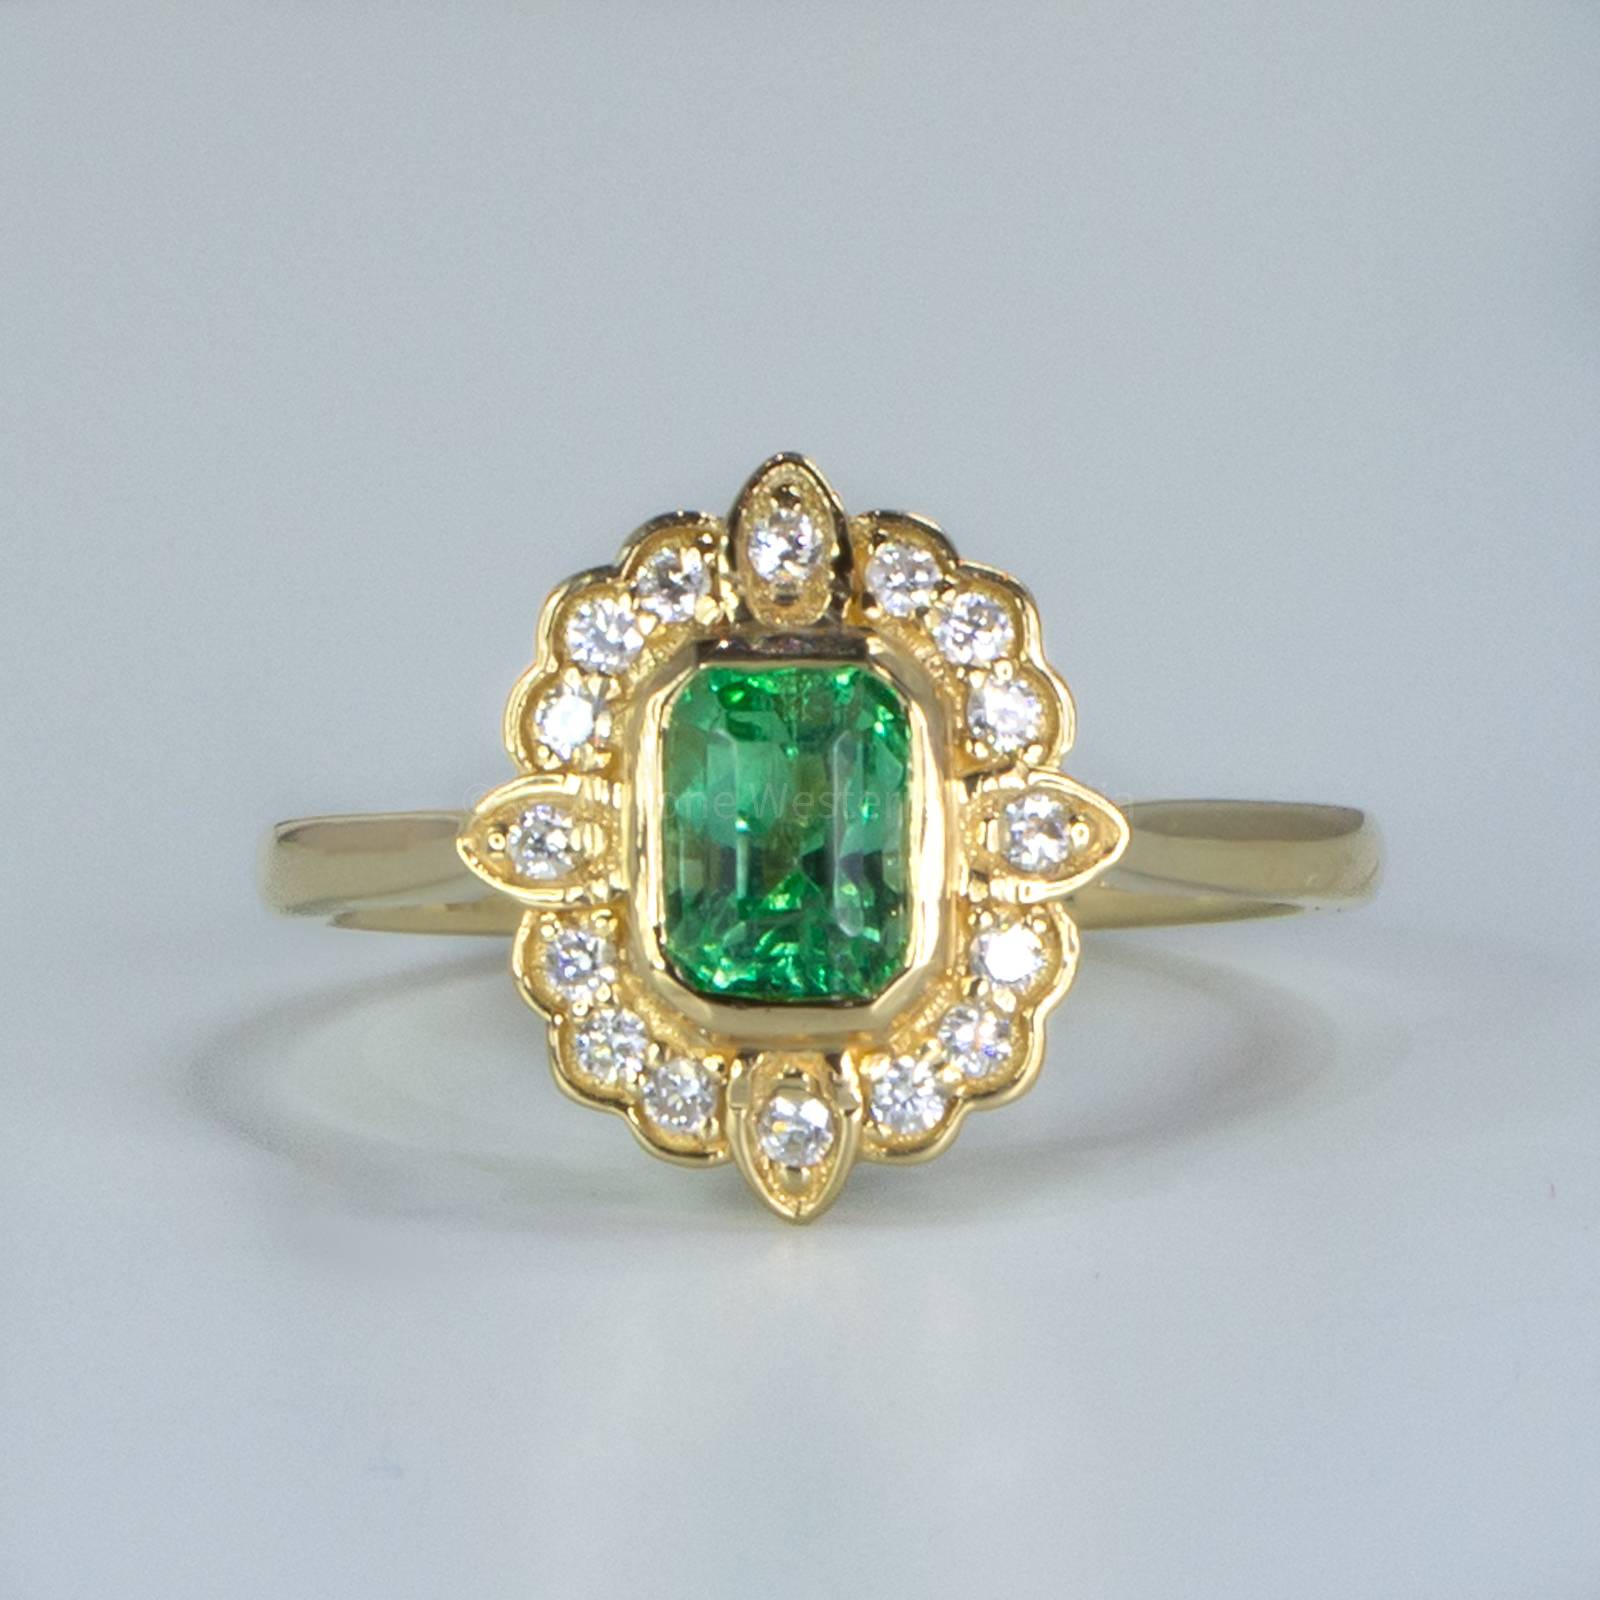 Shop Now Emerald, Rubies, Sapphires and Diamond Jewellery